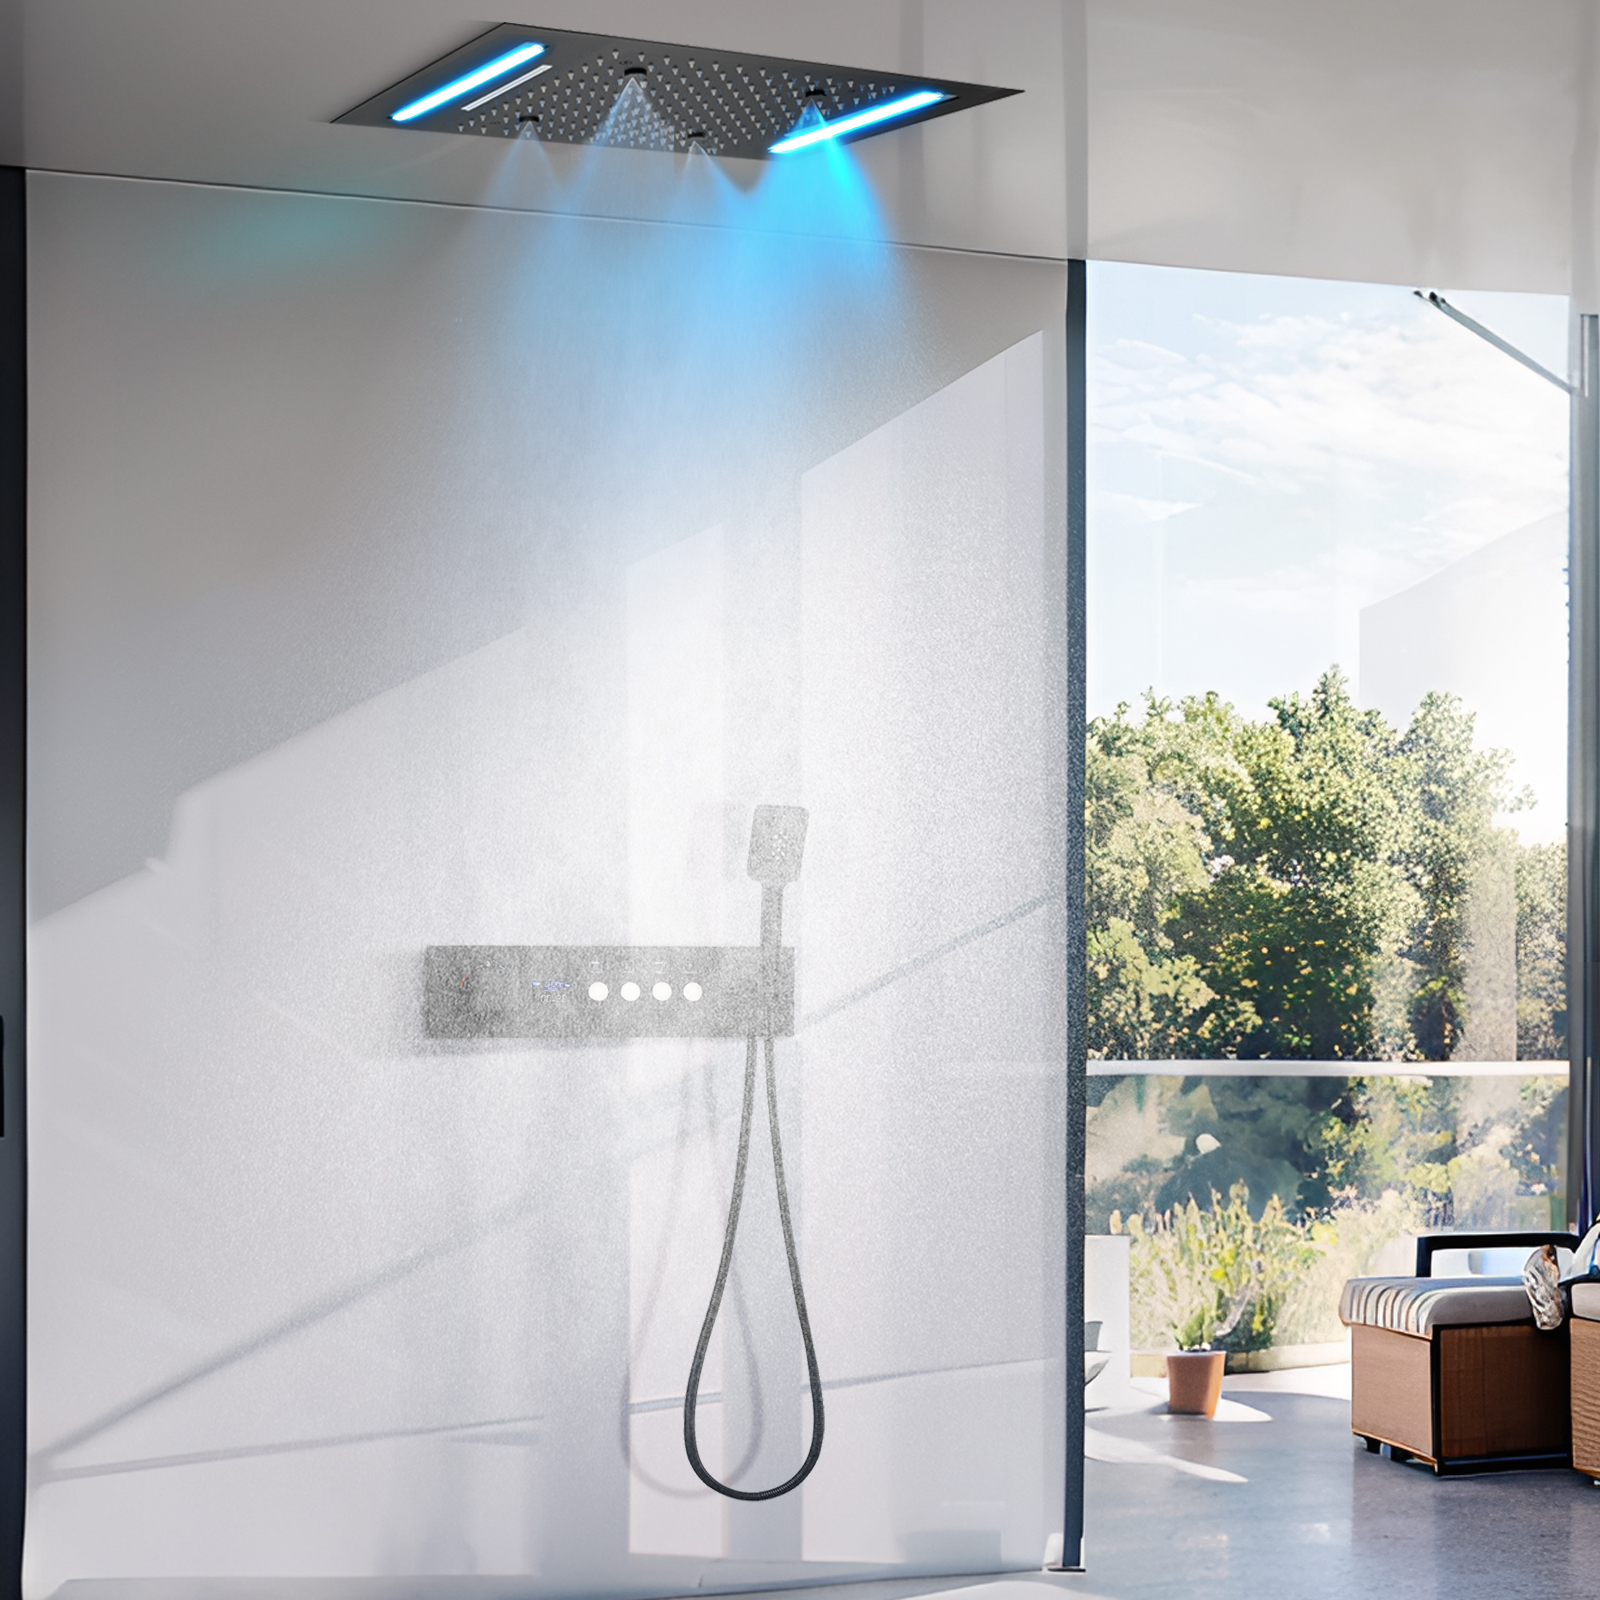 Matte Black LED Display Screen, Digital Constant Temperature Shower Faucet Set, 4-function Rainwater Shower Massage System